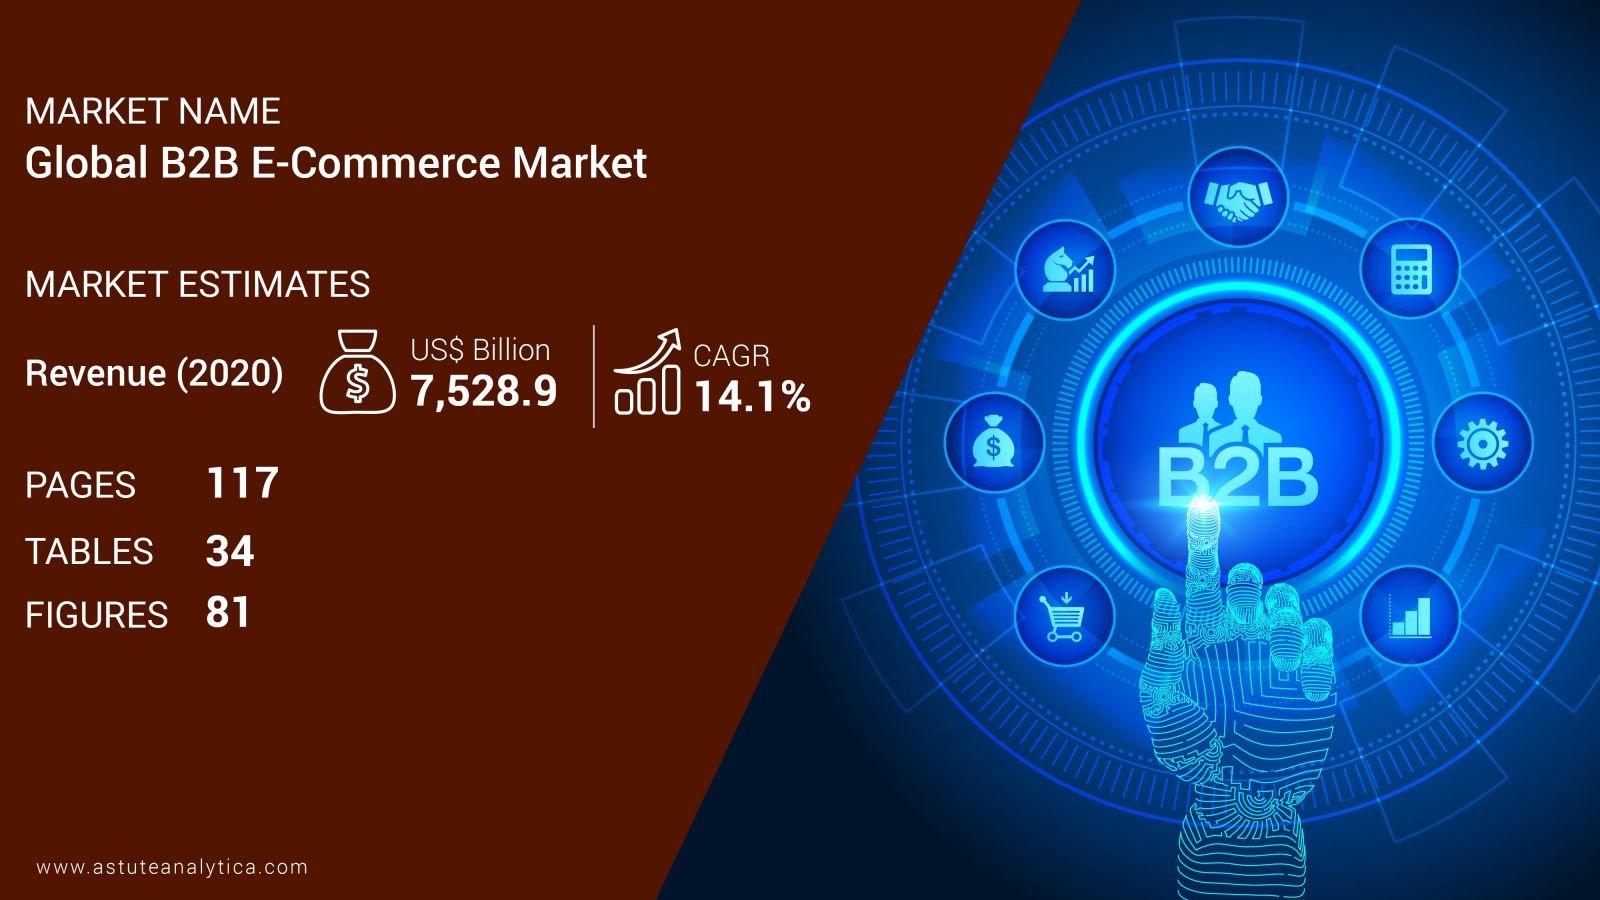 B2B E-commerce Market Report Scope